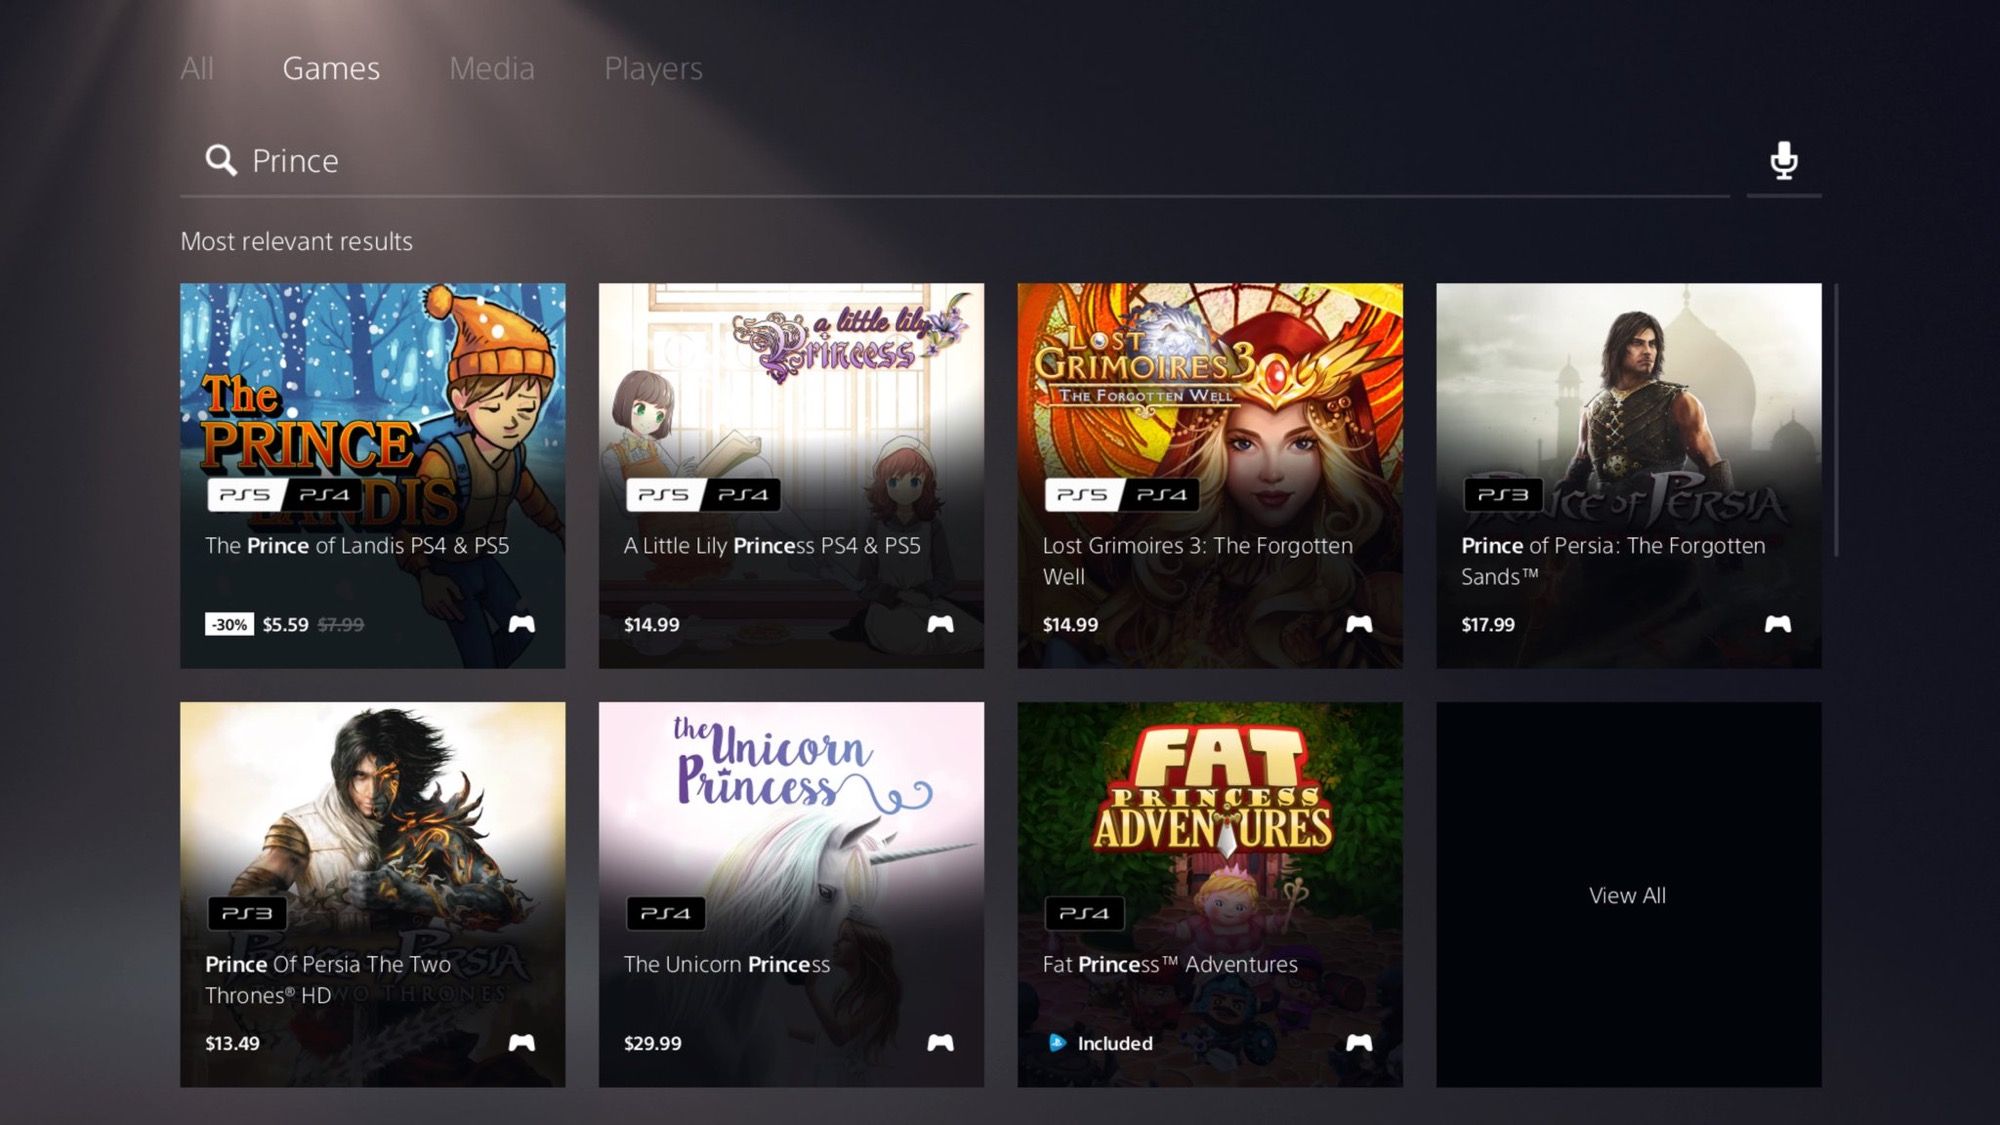 Prince of Persia - PS3 - Screenshots PS Store